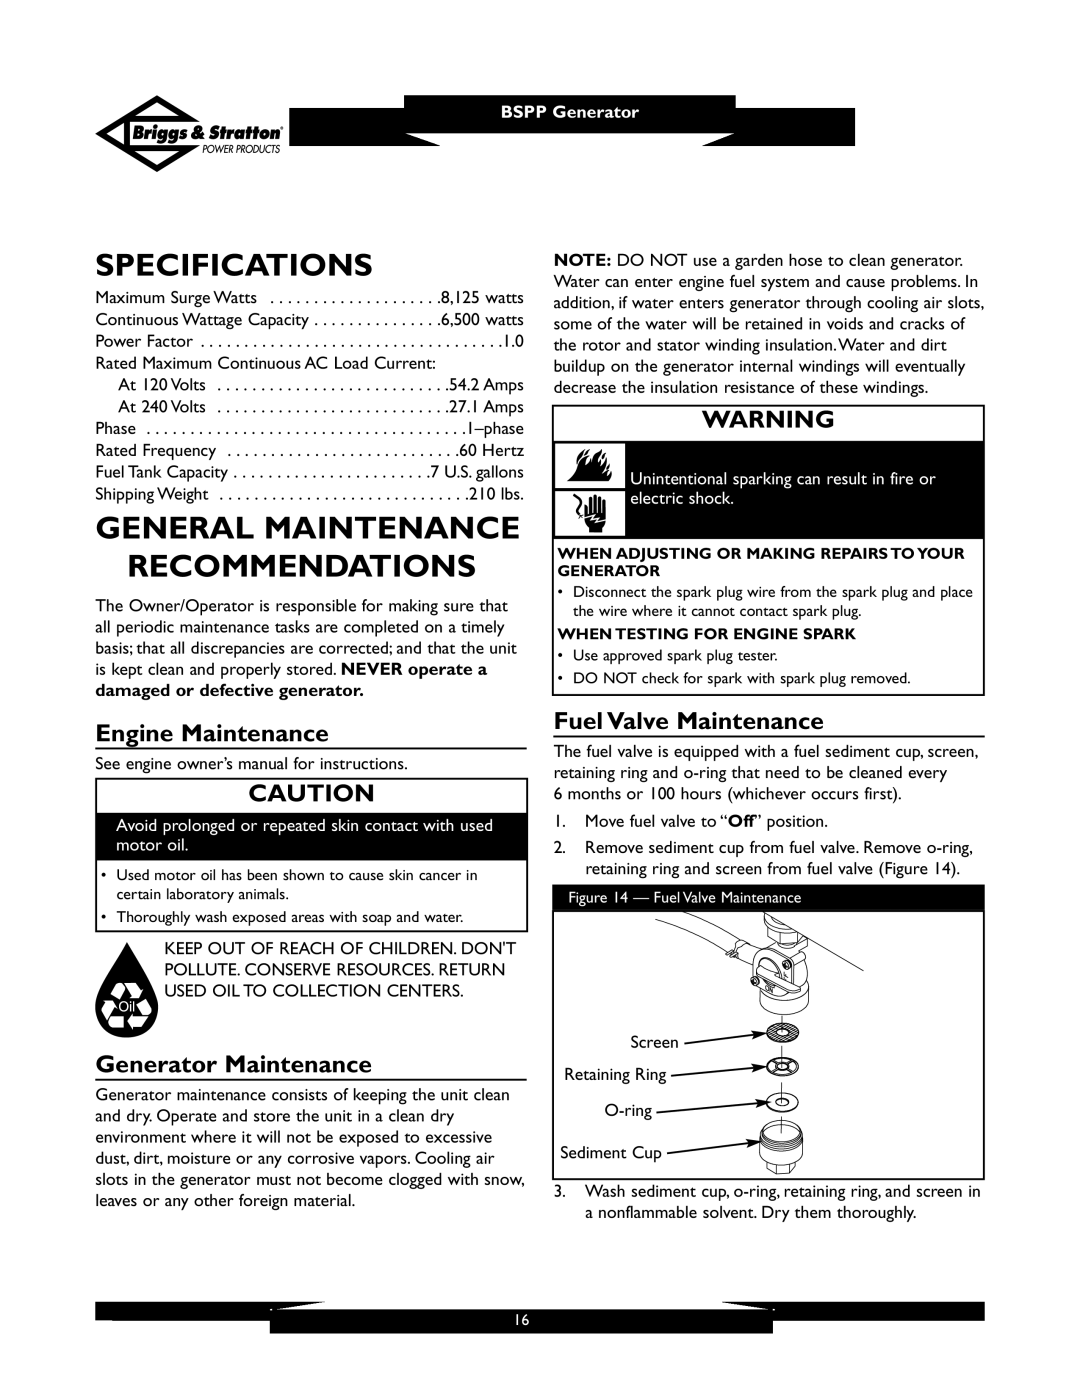 Briggs & Stratton PRO6500 Specifications, General Maintenance Recommendations, Engine Maintenance, Generator Maintenance 